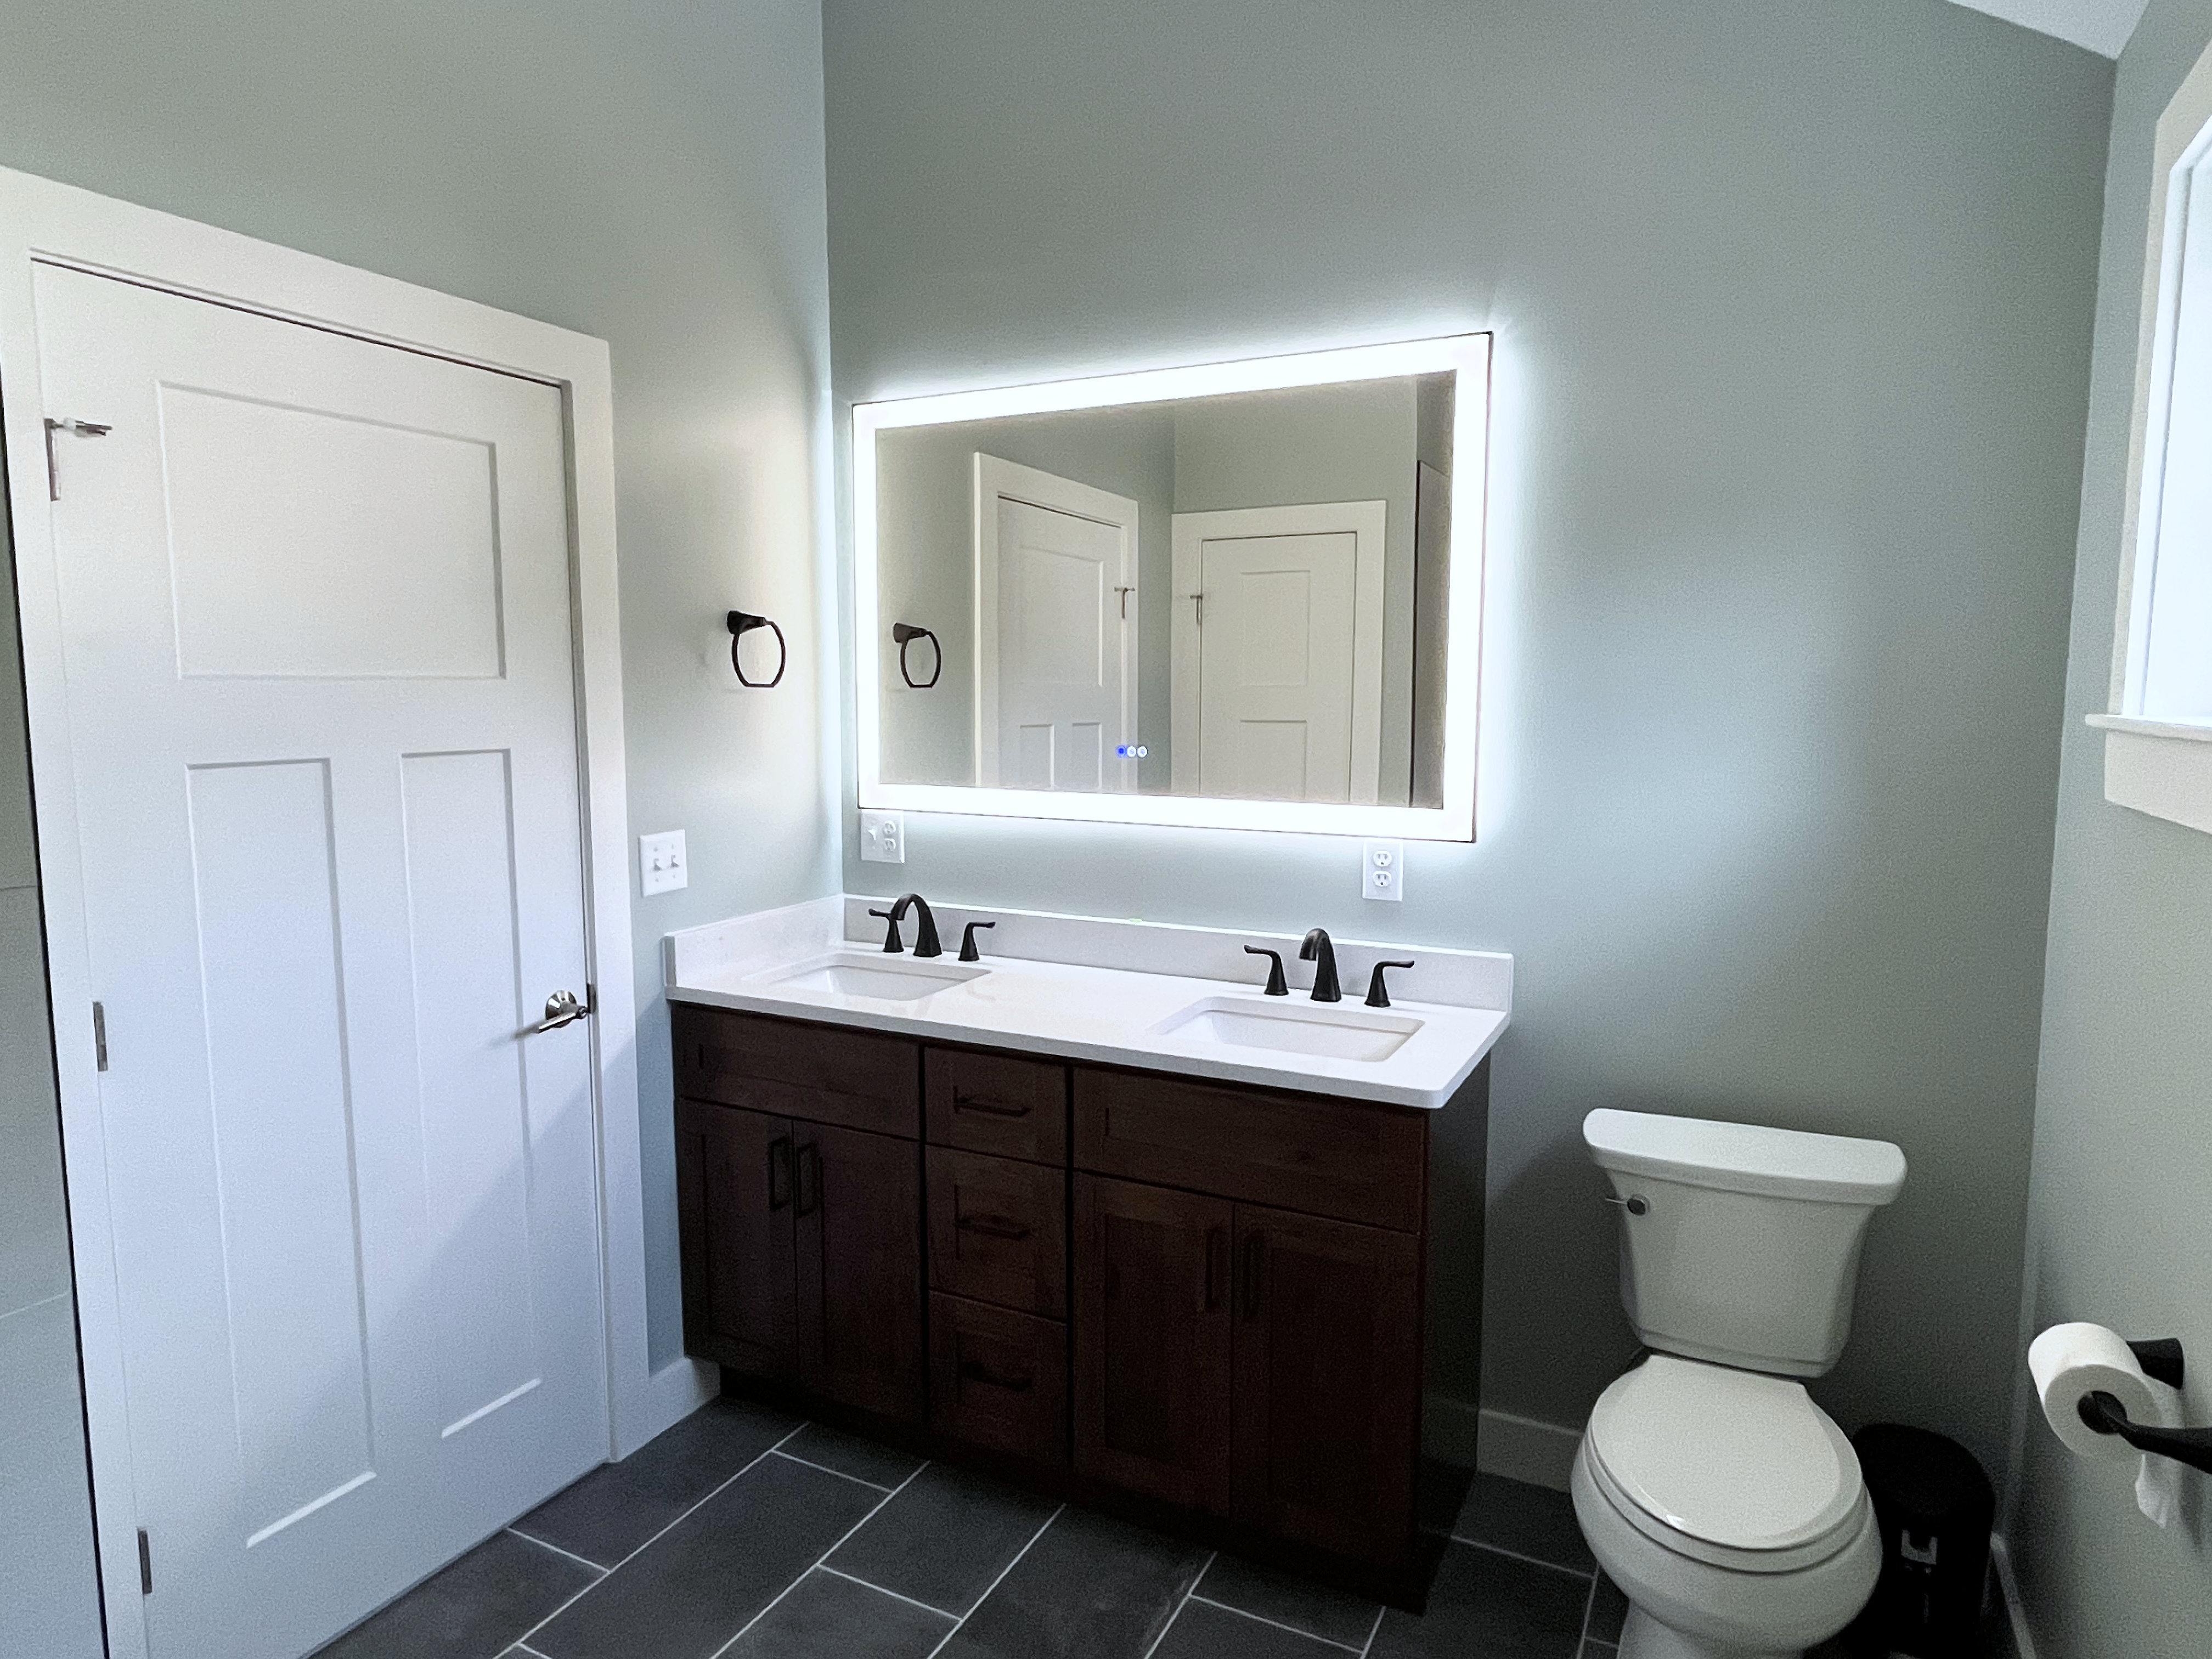 Brand new master bathroom renovation with new granite countertop vanity